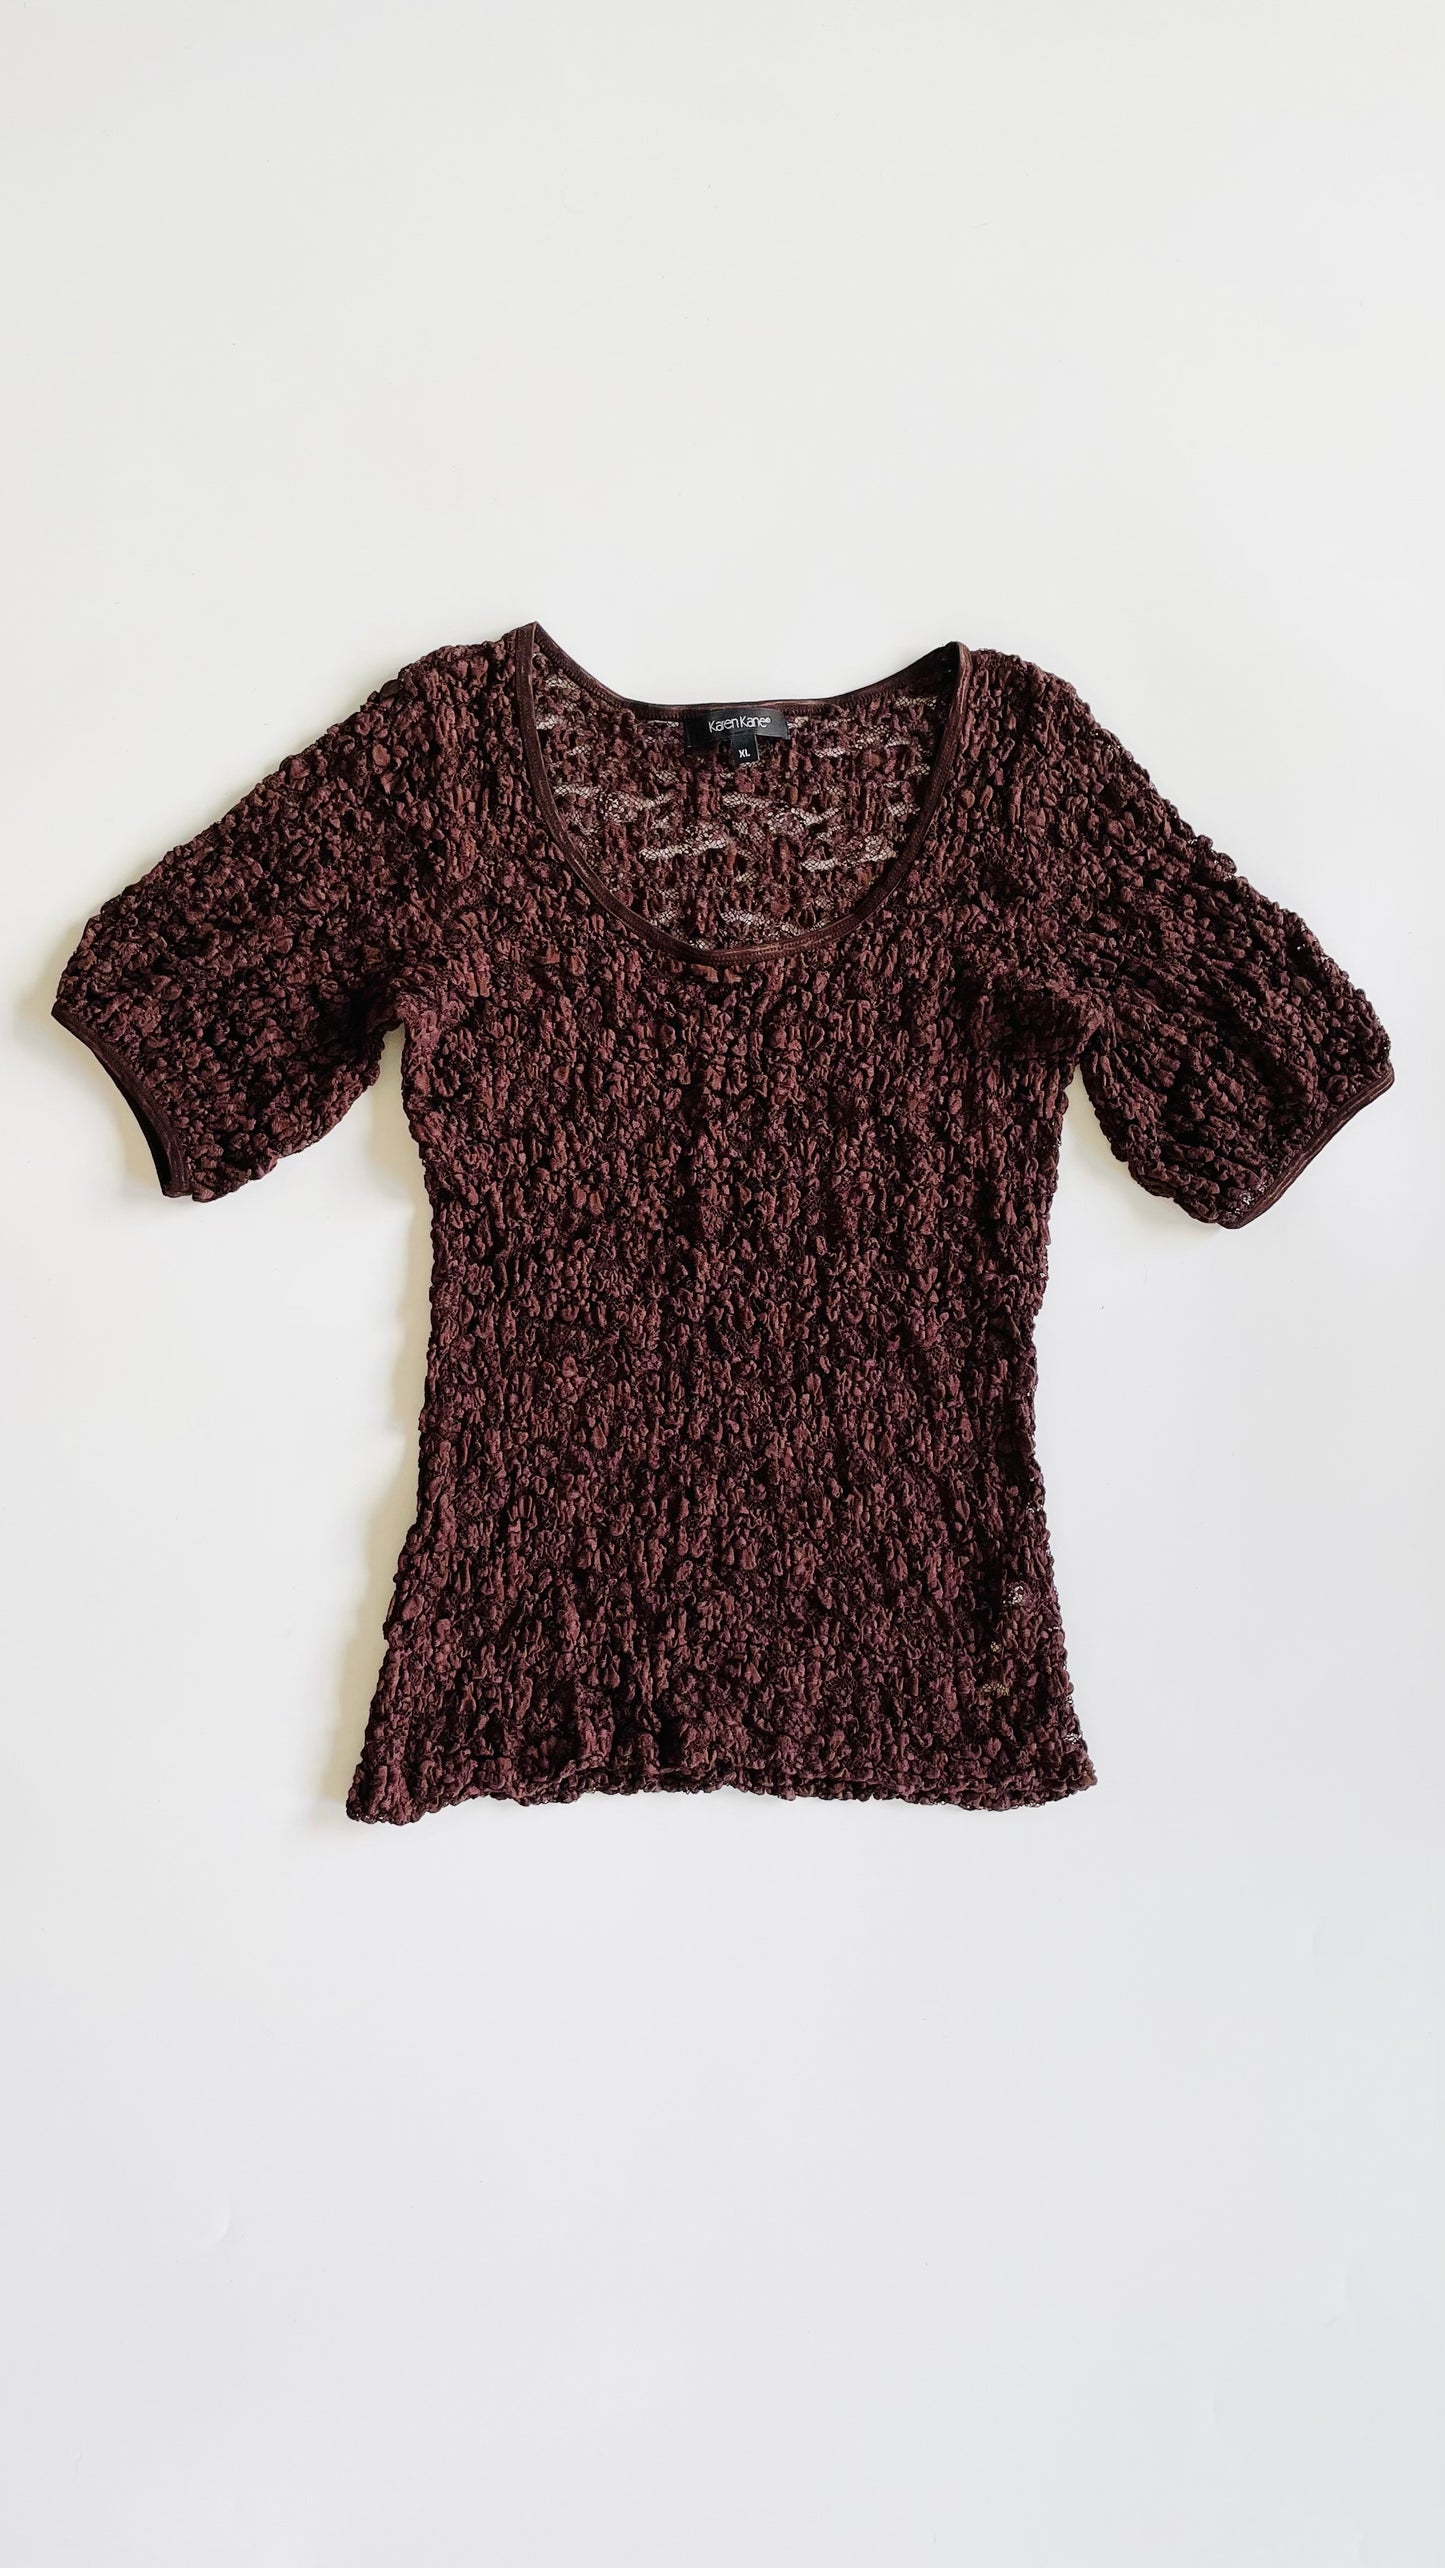 Vintage 90s Karen Kane brown floral lace knit top - Size M-XL